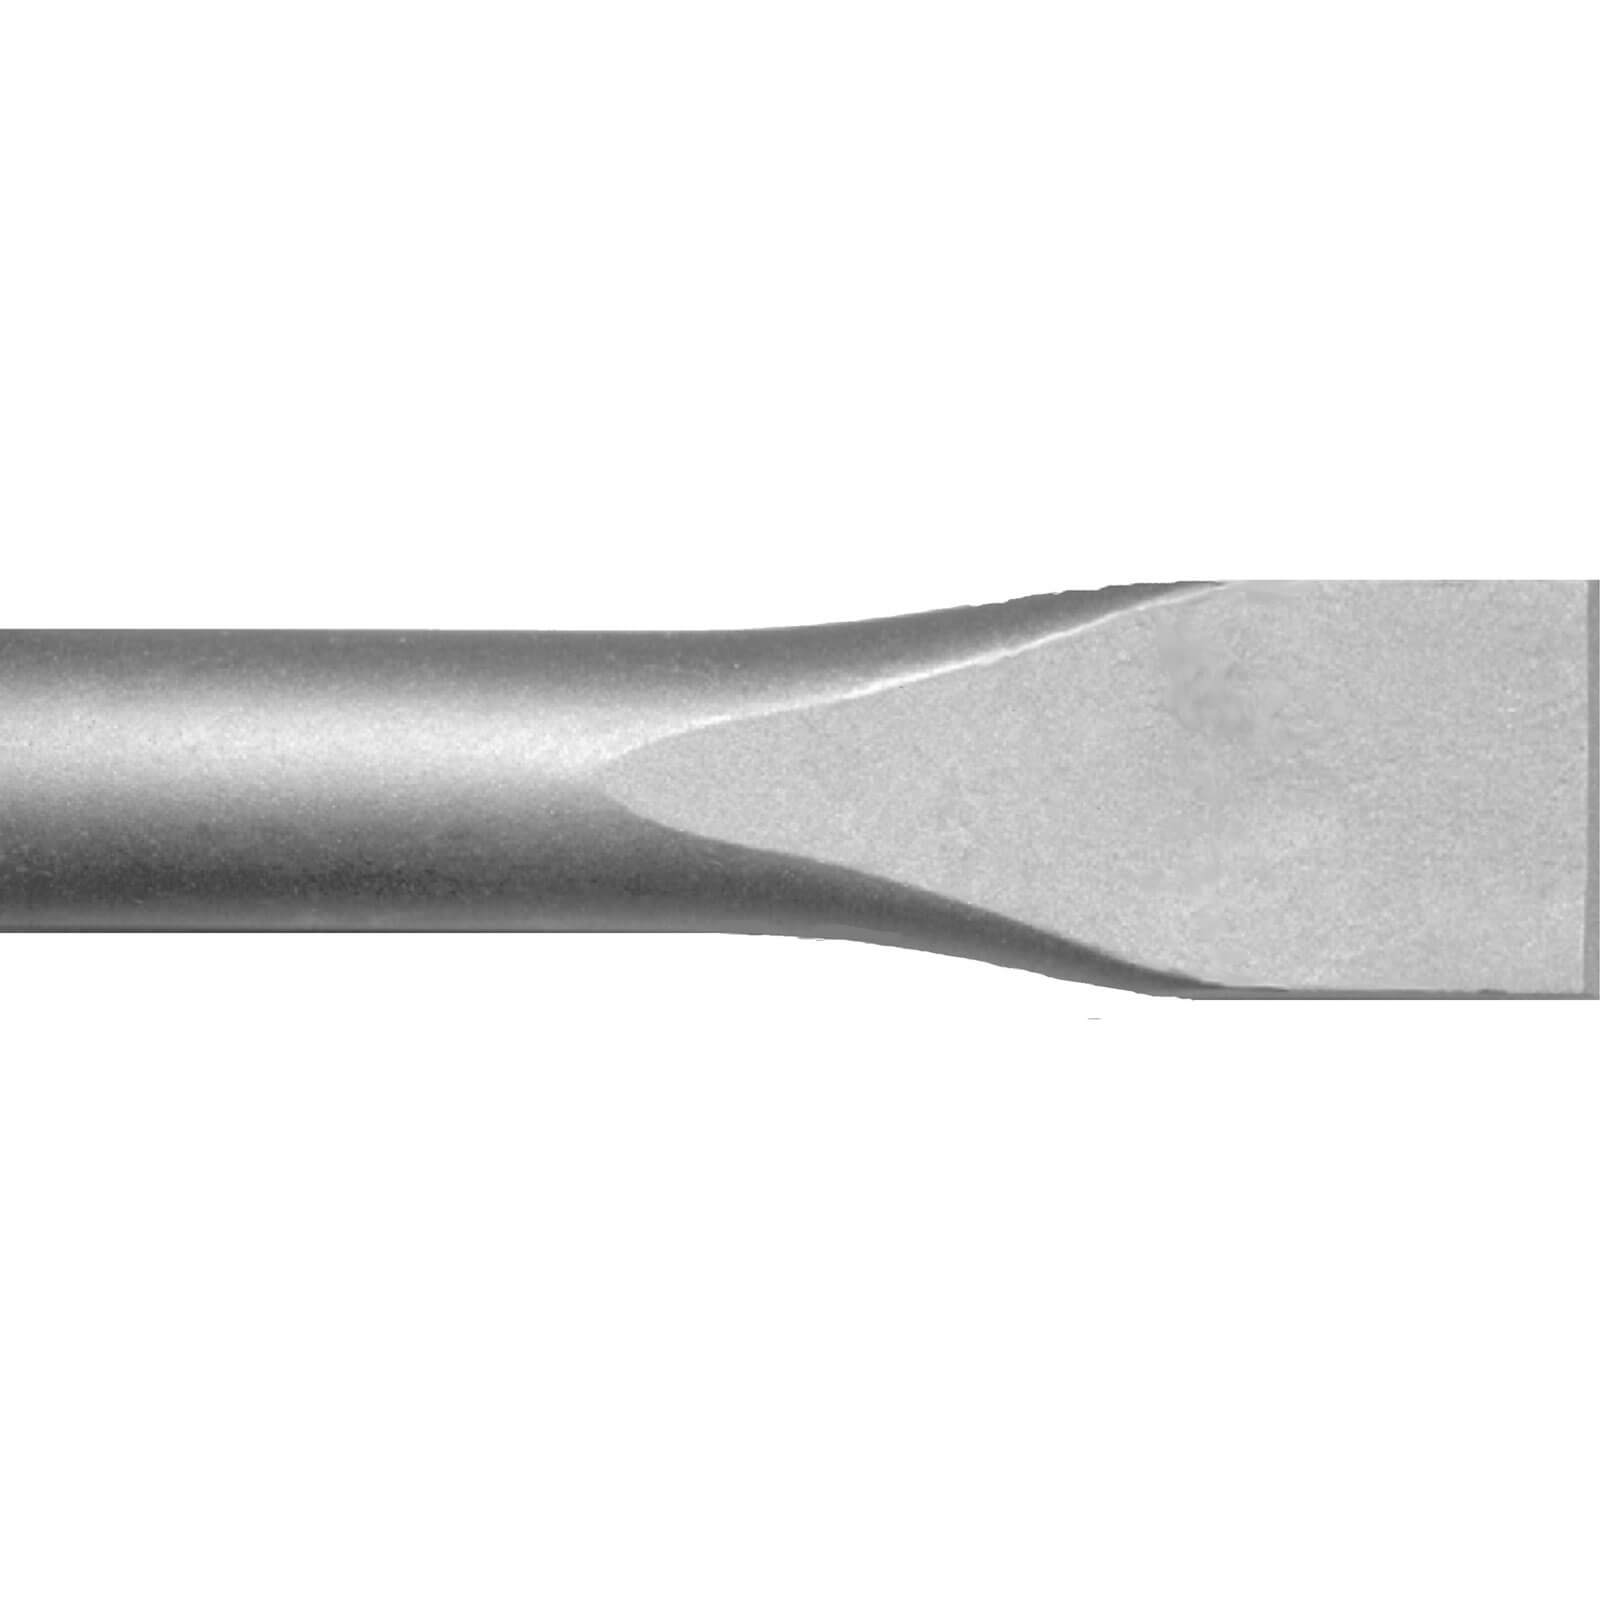 Image of Irwin Speedhammer SDS Max Flat Chisel Bit 25mm 280mm